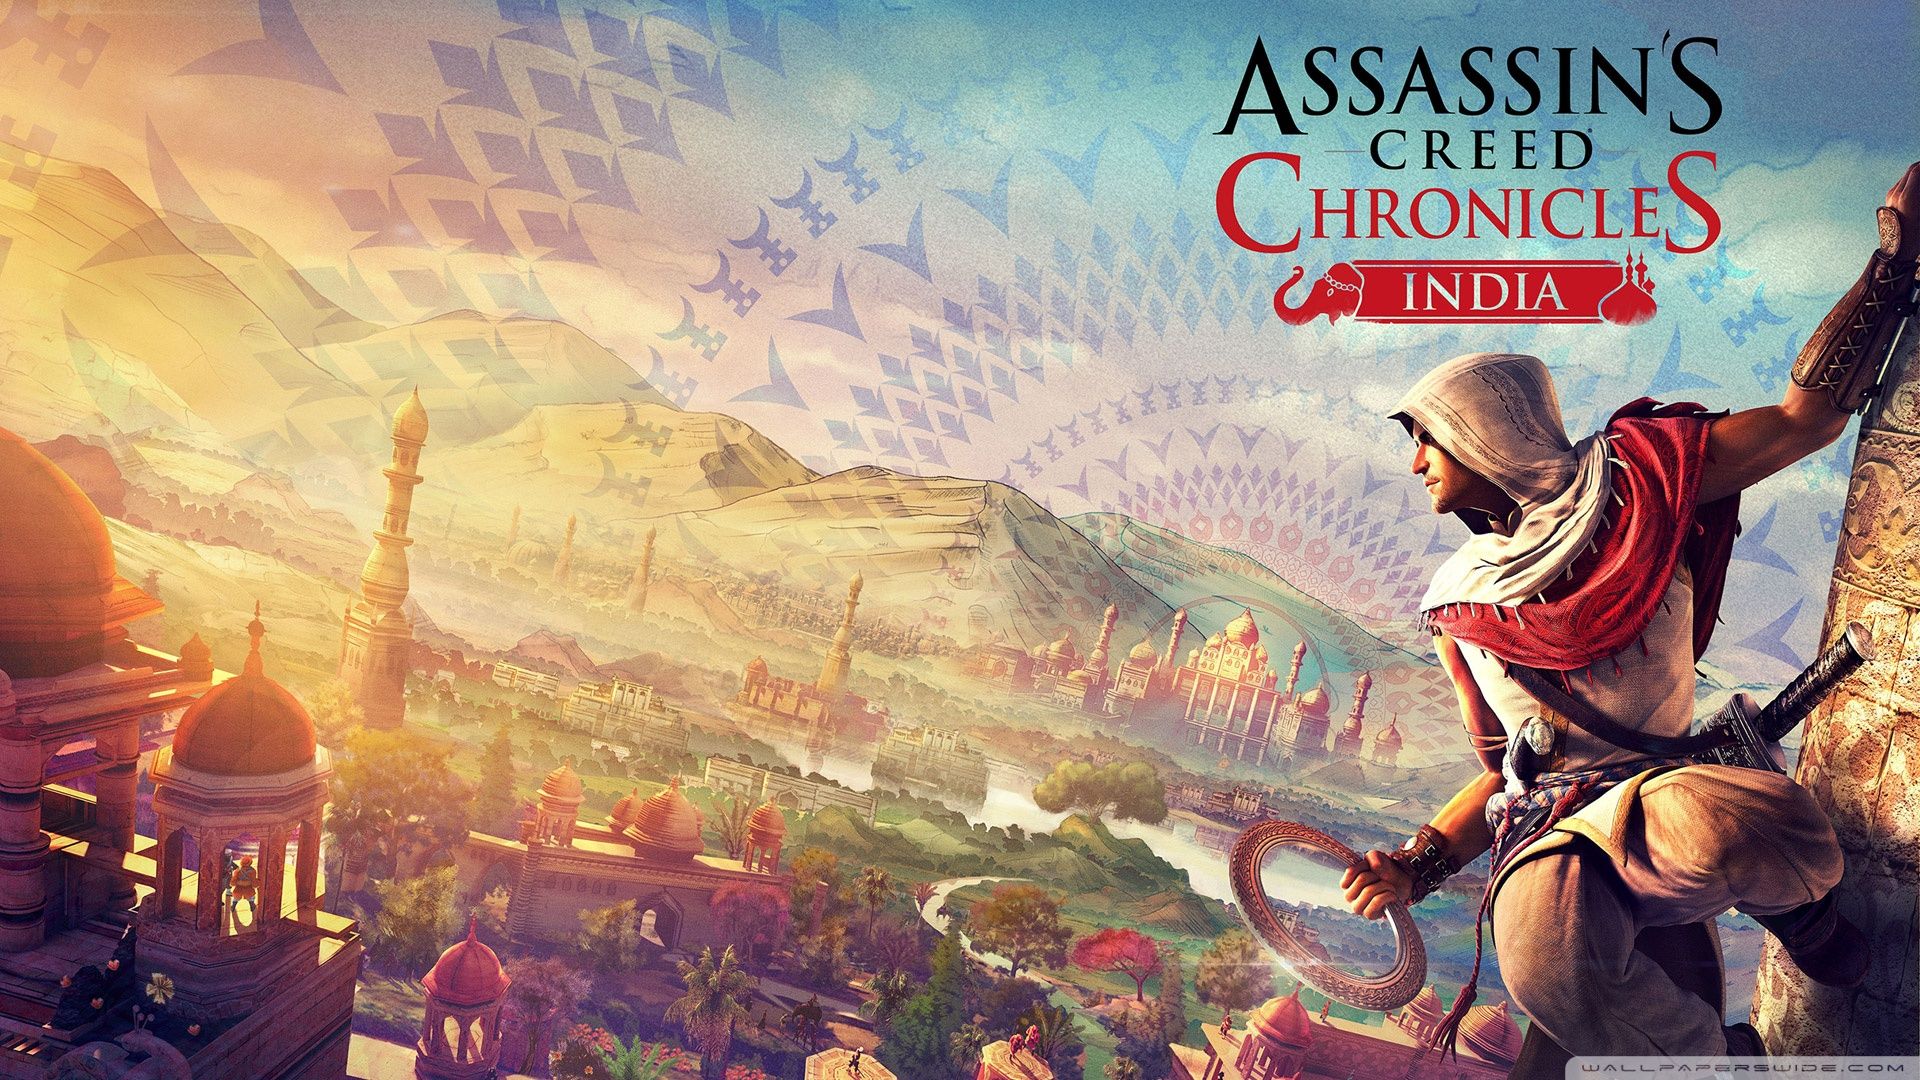 Assassin's Creed Chronicles India Ultra HD Desktop Background Wallpaper for 4K UHD TV, Widescreen & UltraWide Desktop & Laptop, Tablet